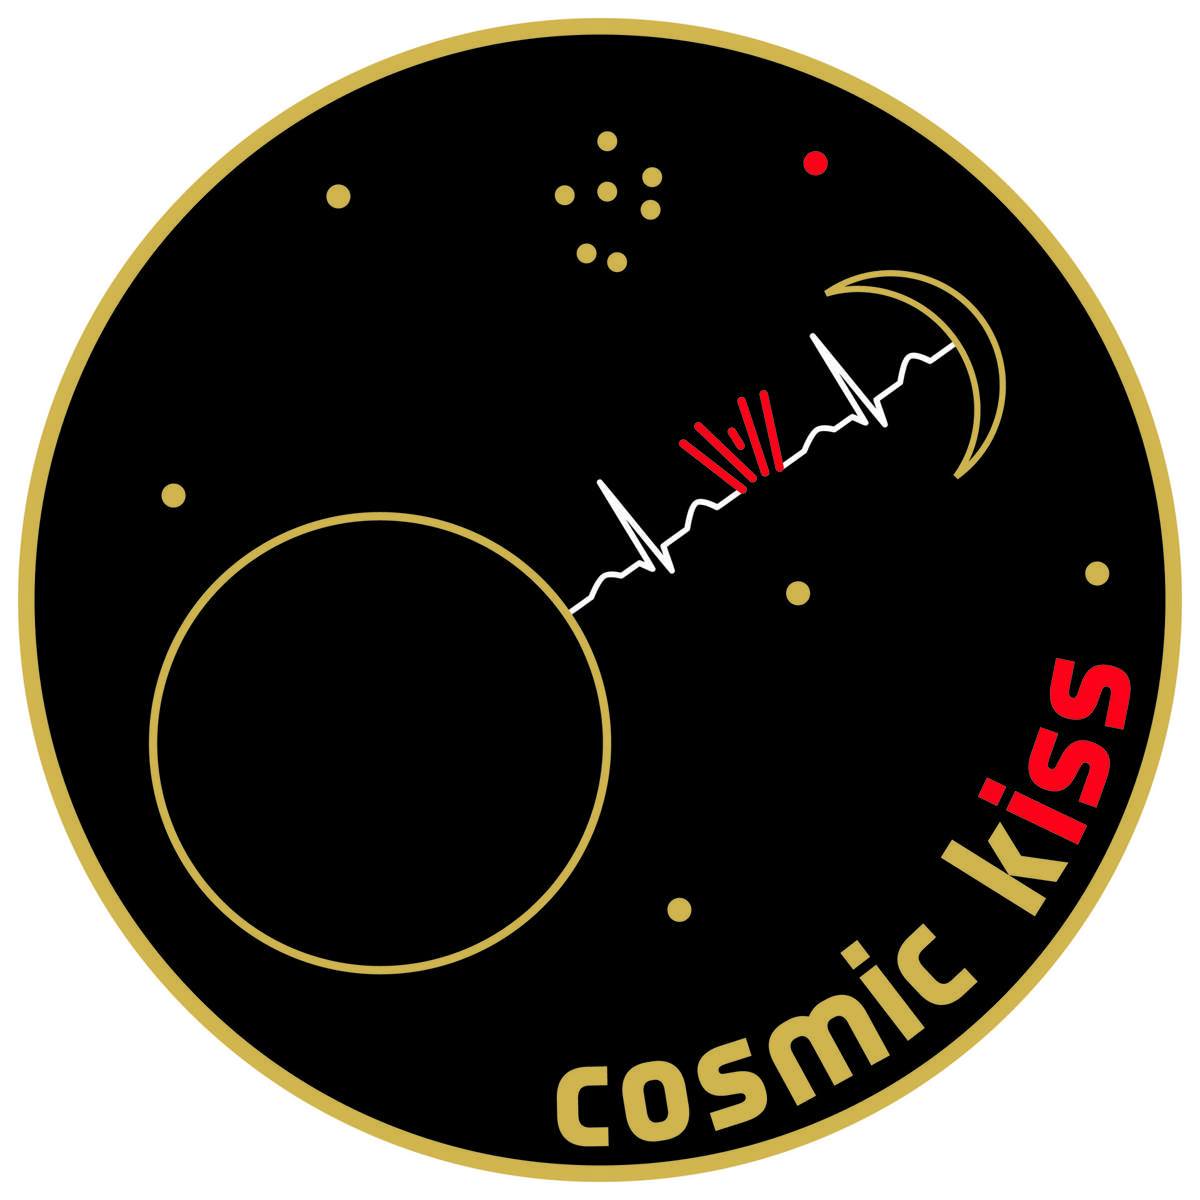 Mission logo “Cosmic Kiss". 